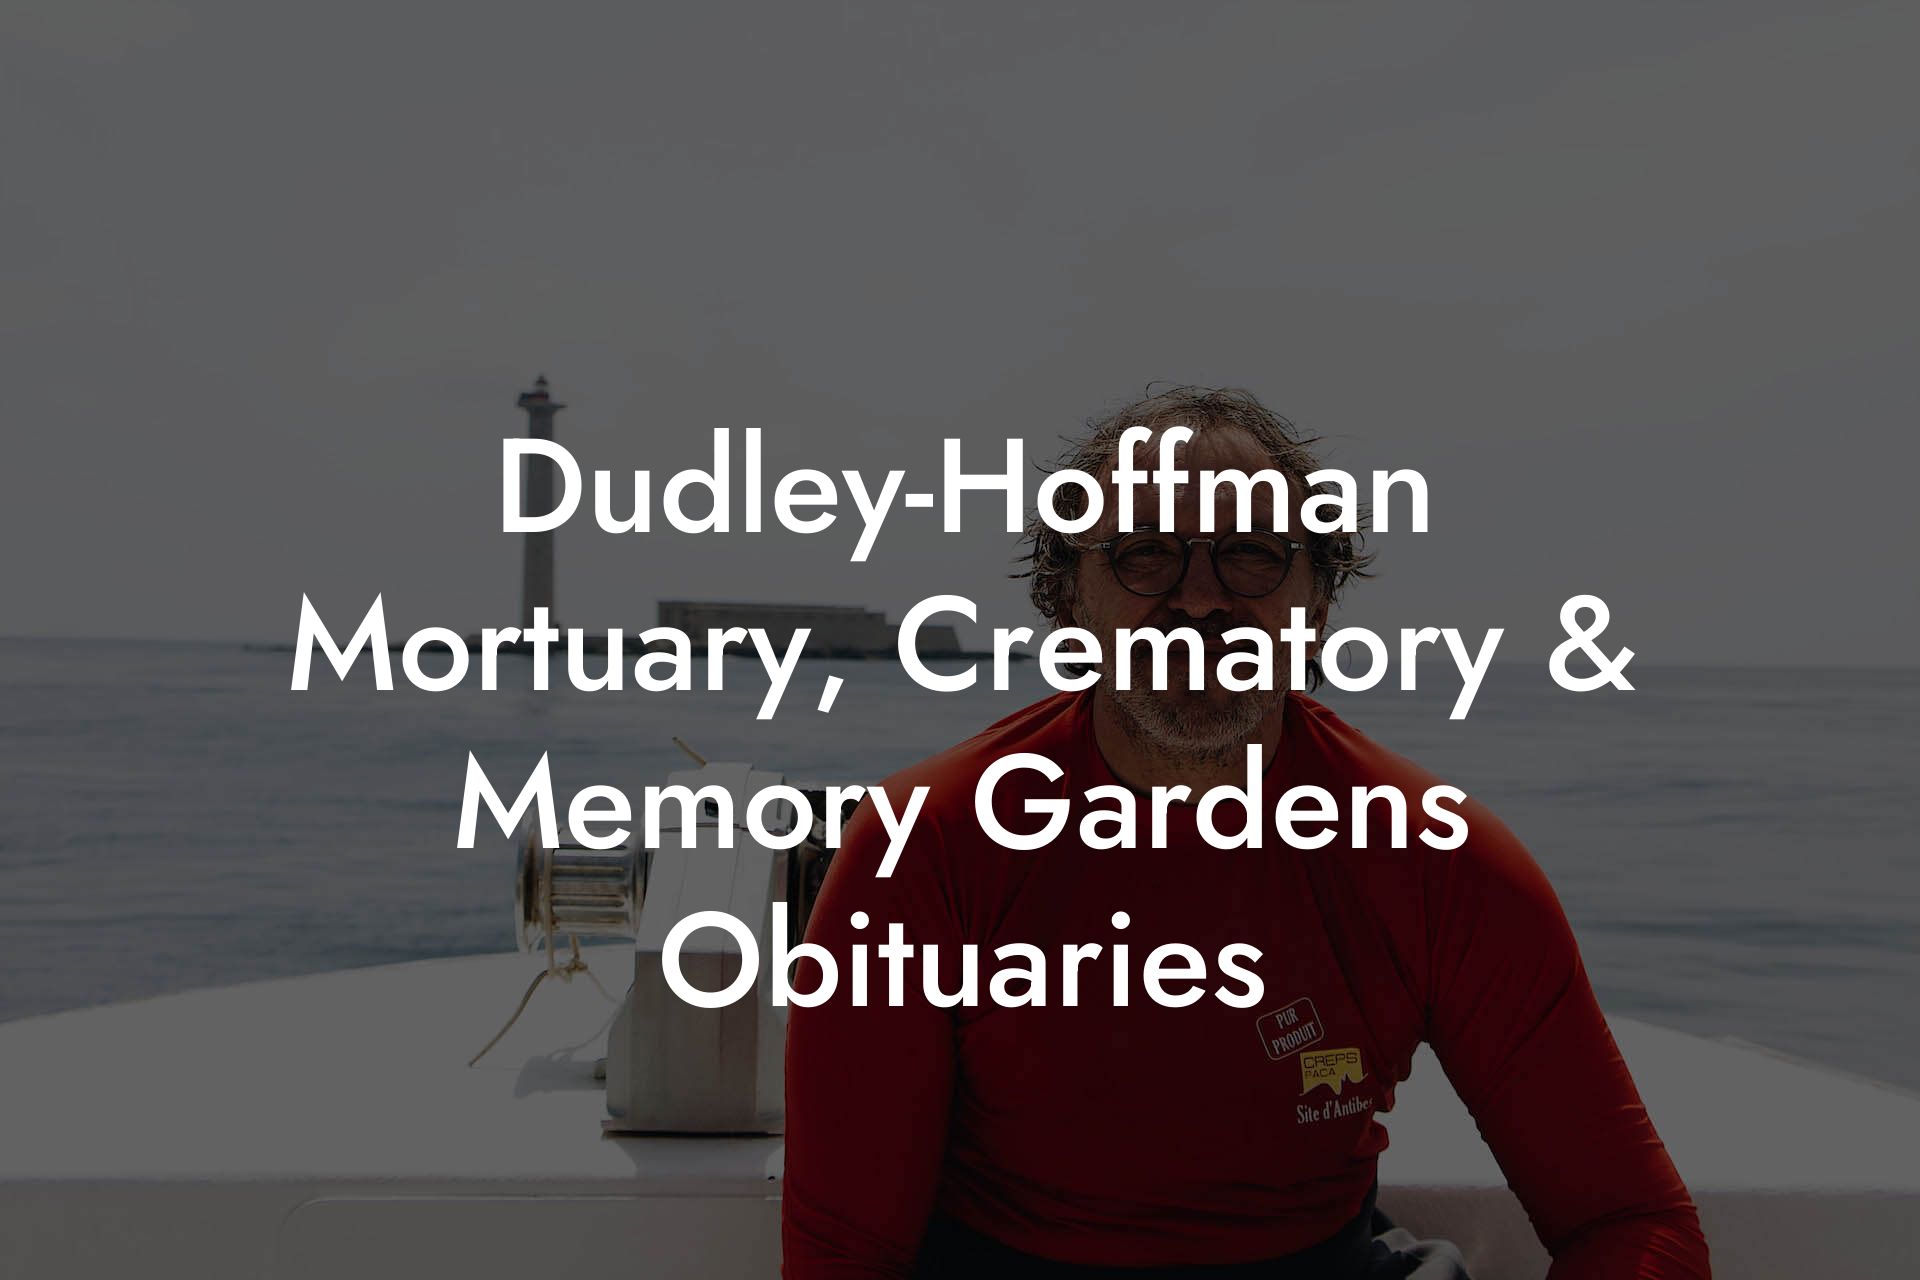 Dudley-Hoffman Mortuary, Crematory & Memory Gardens Obituaries